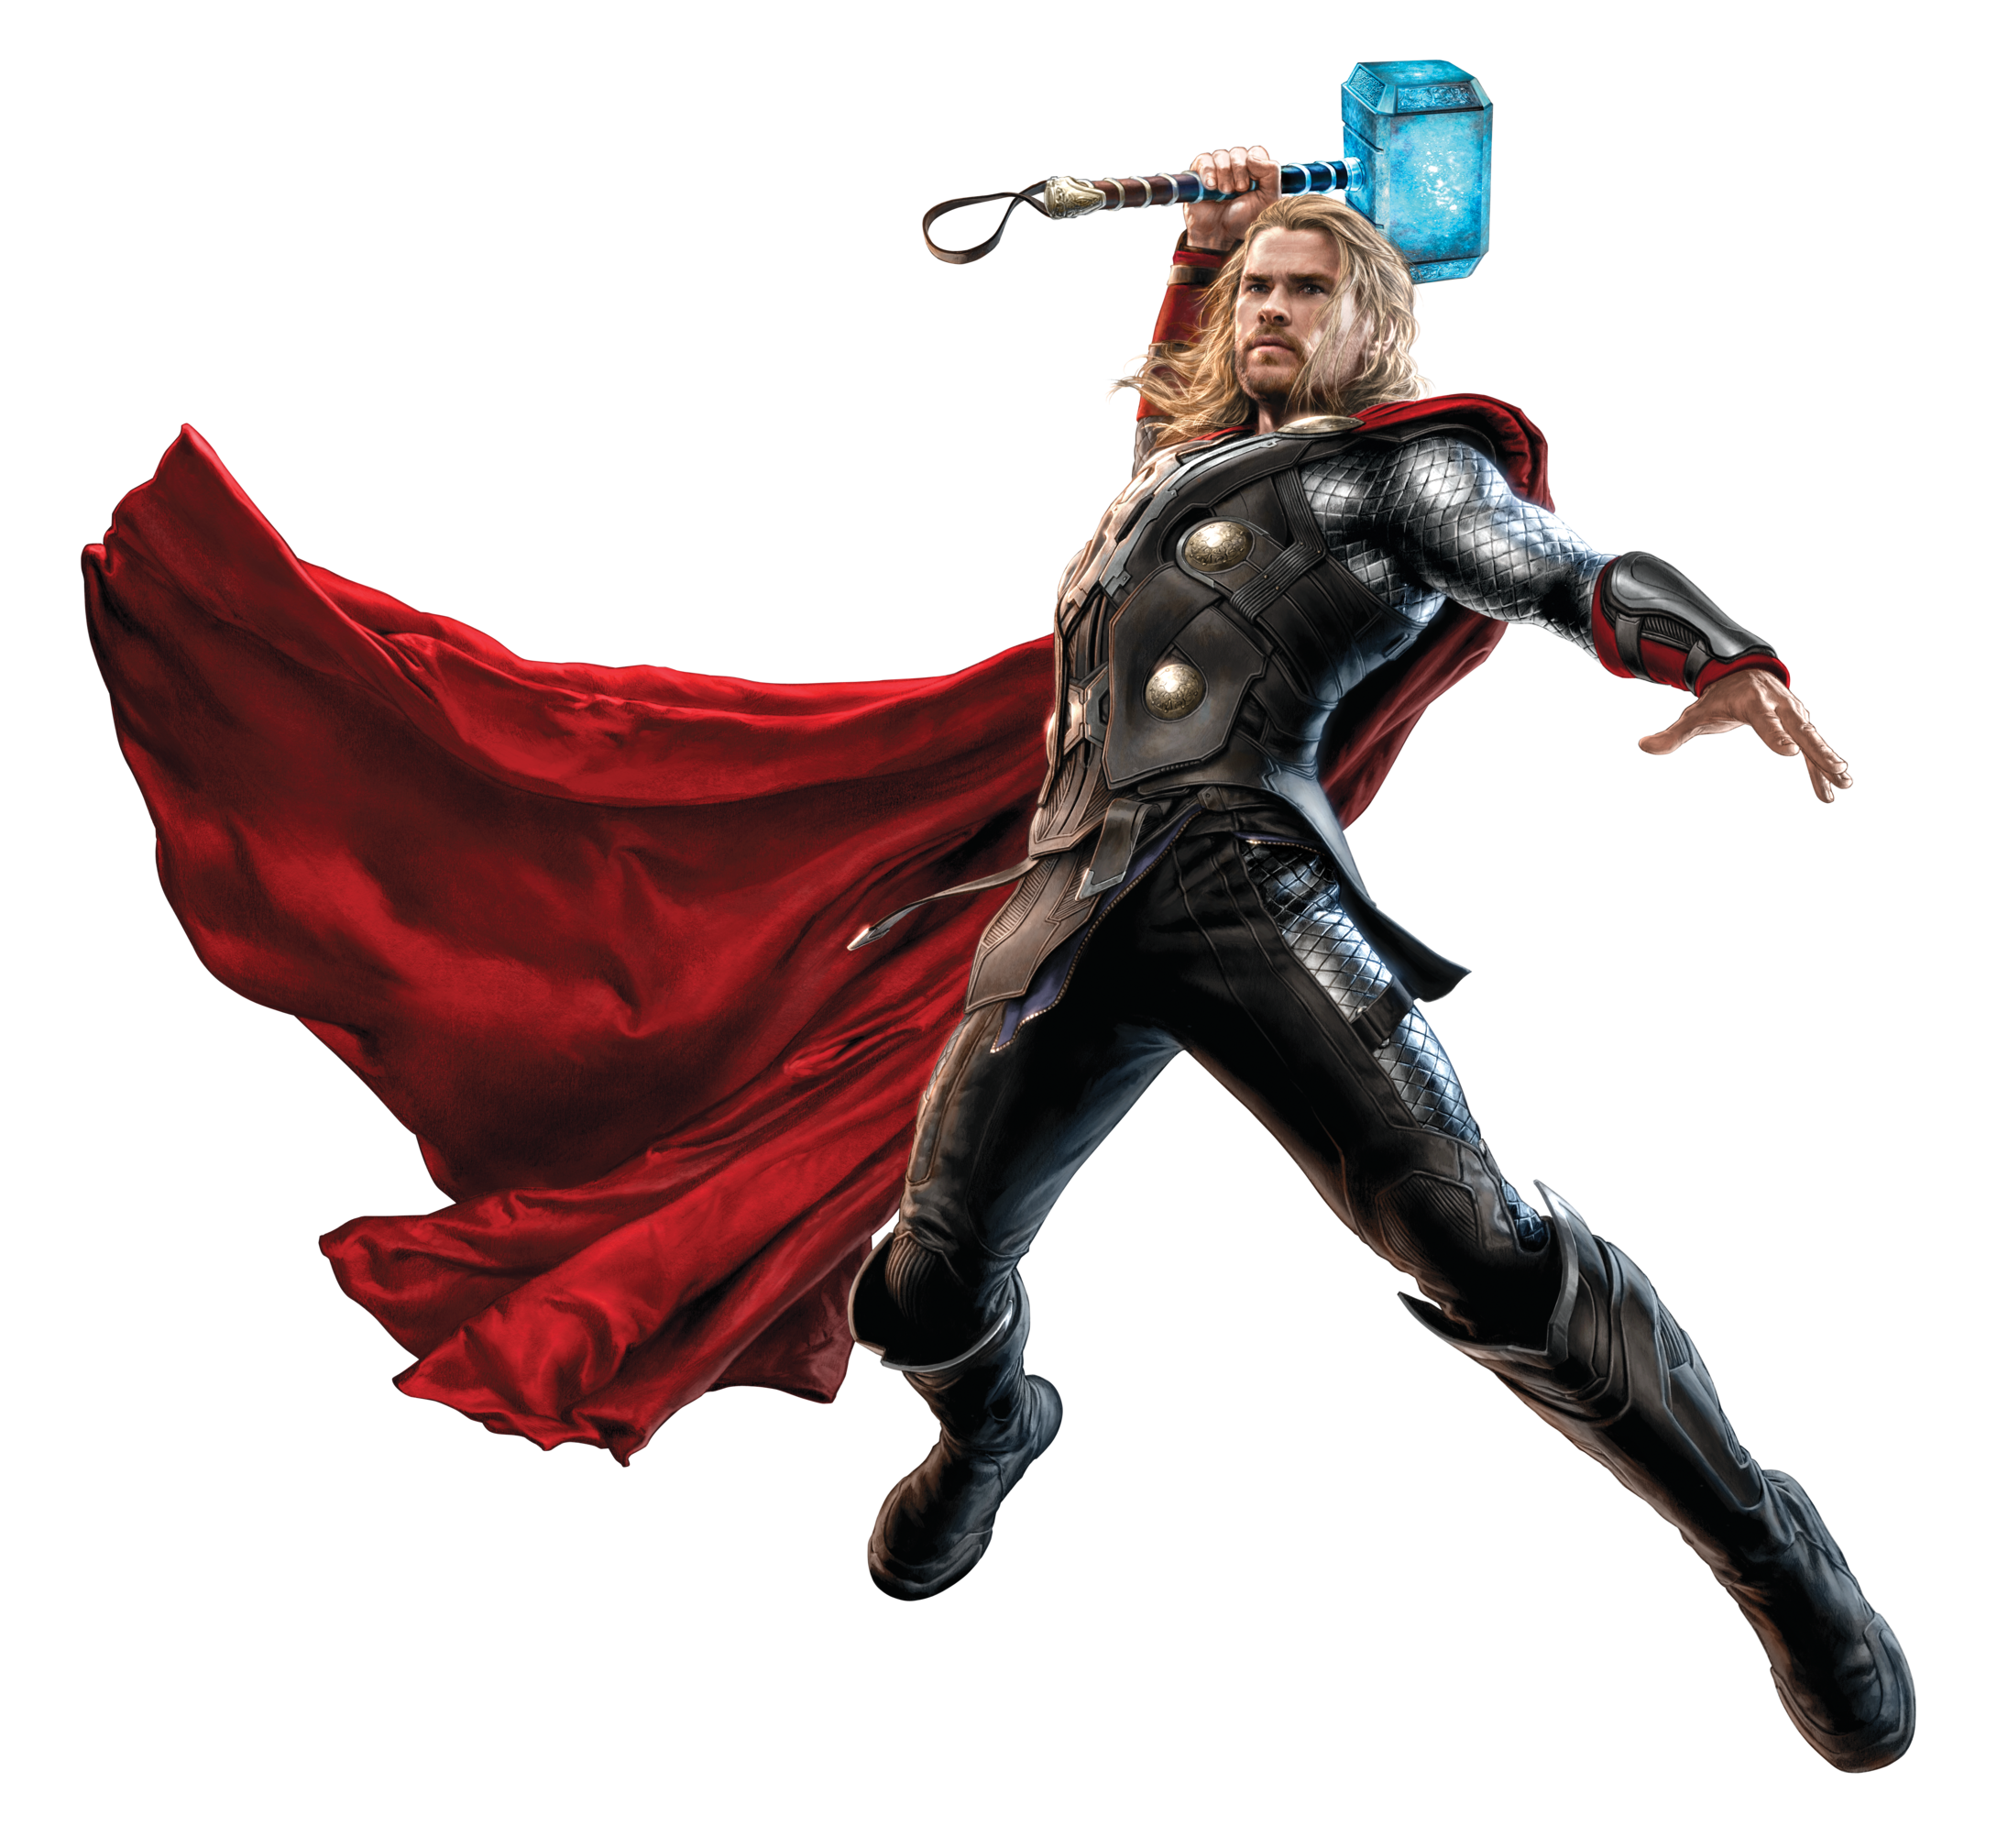 Image - Thor 2 Avengers FH.pn